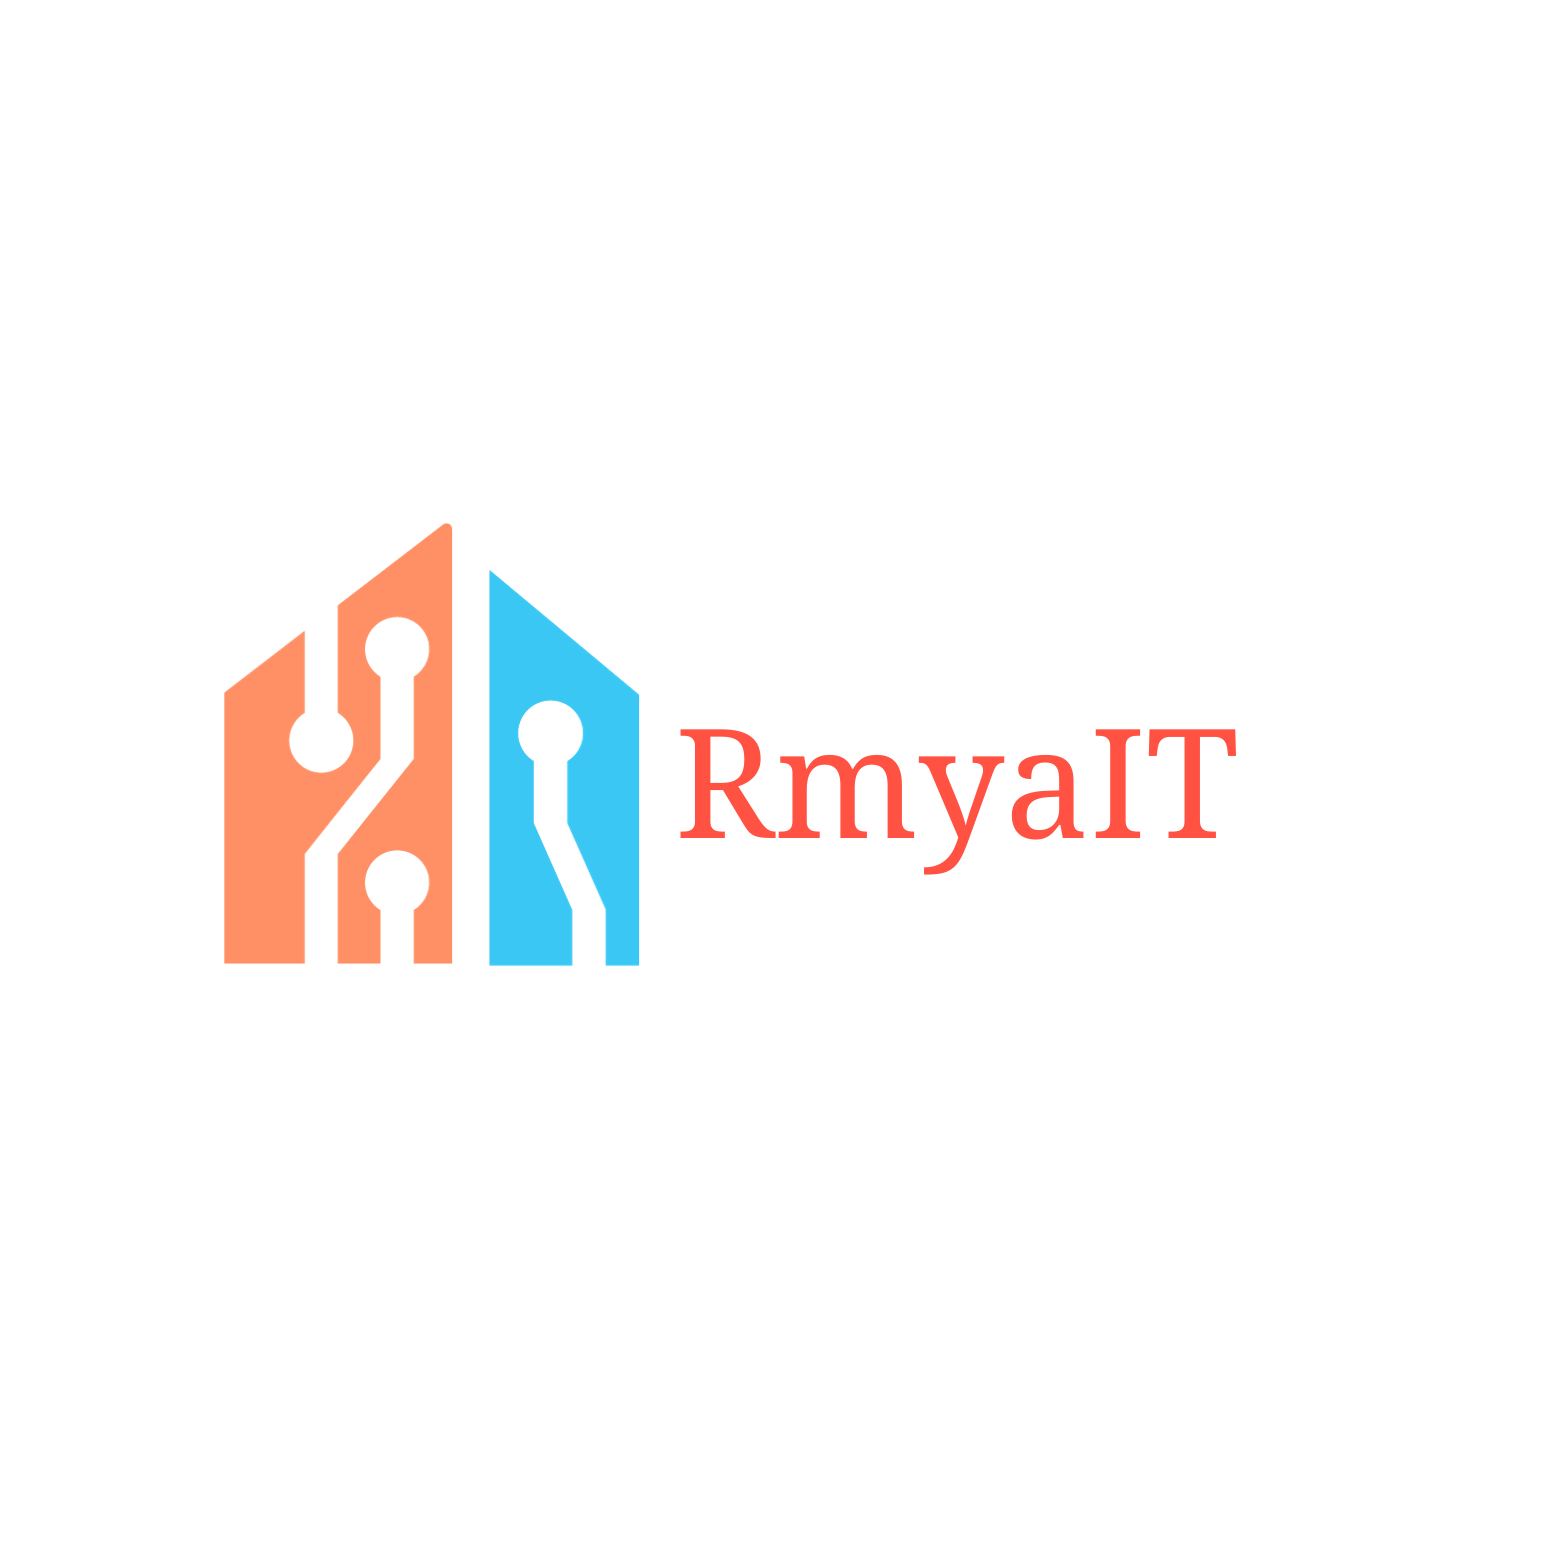 RmyaIT Software Company Logo